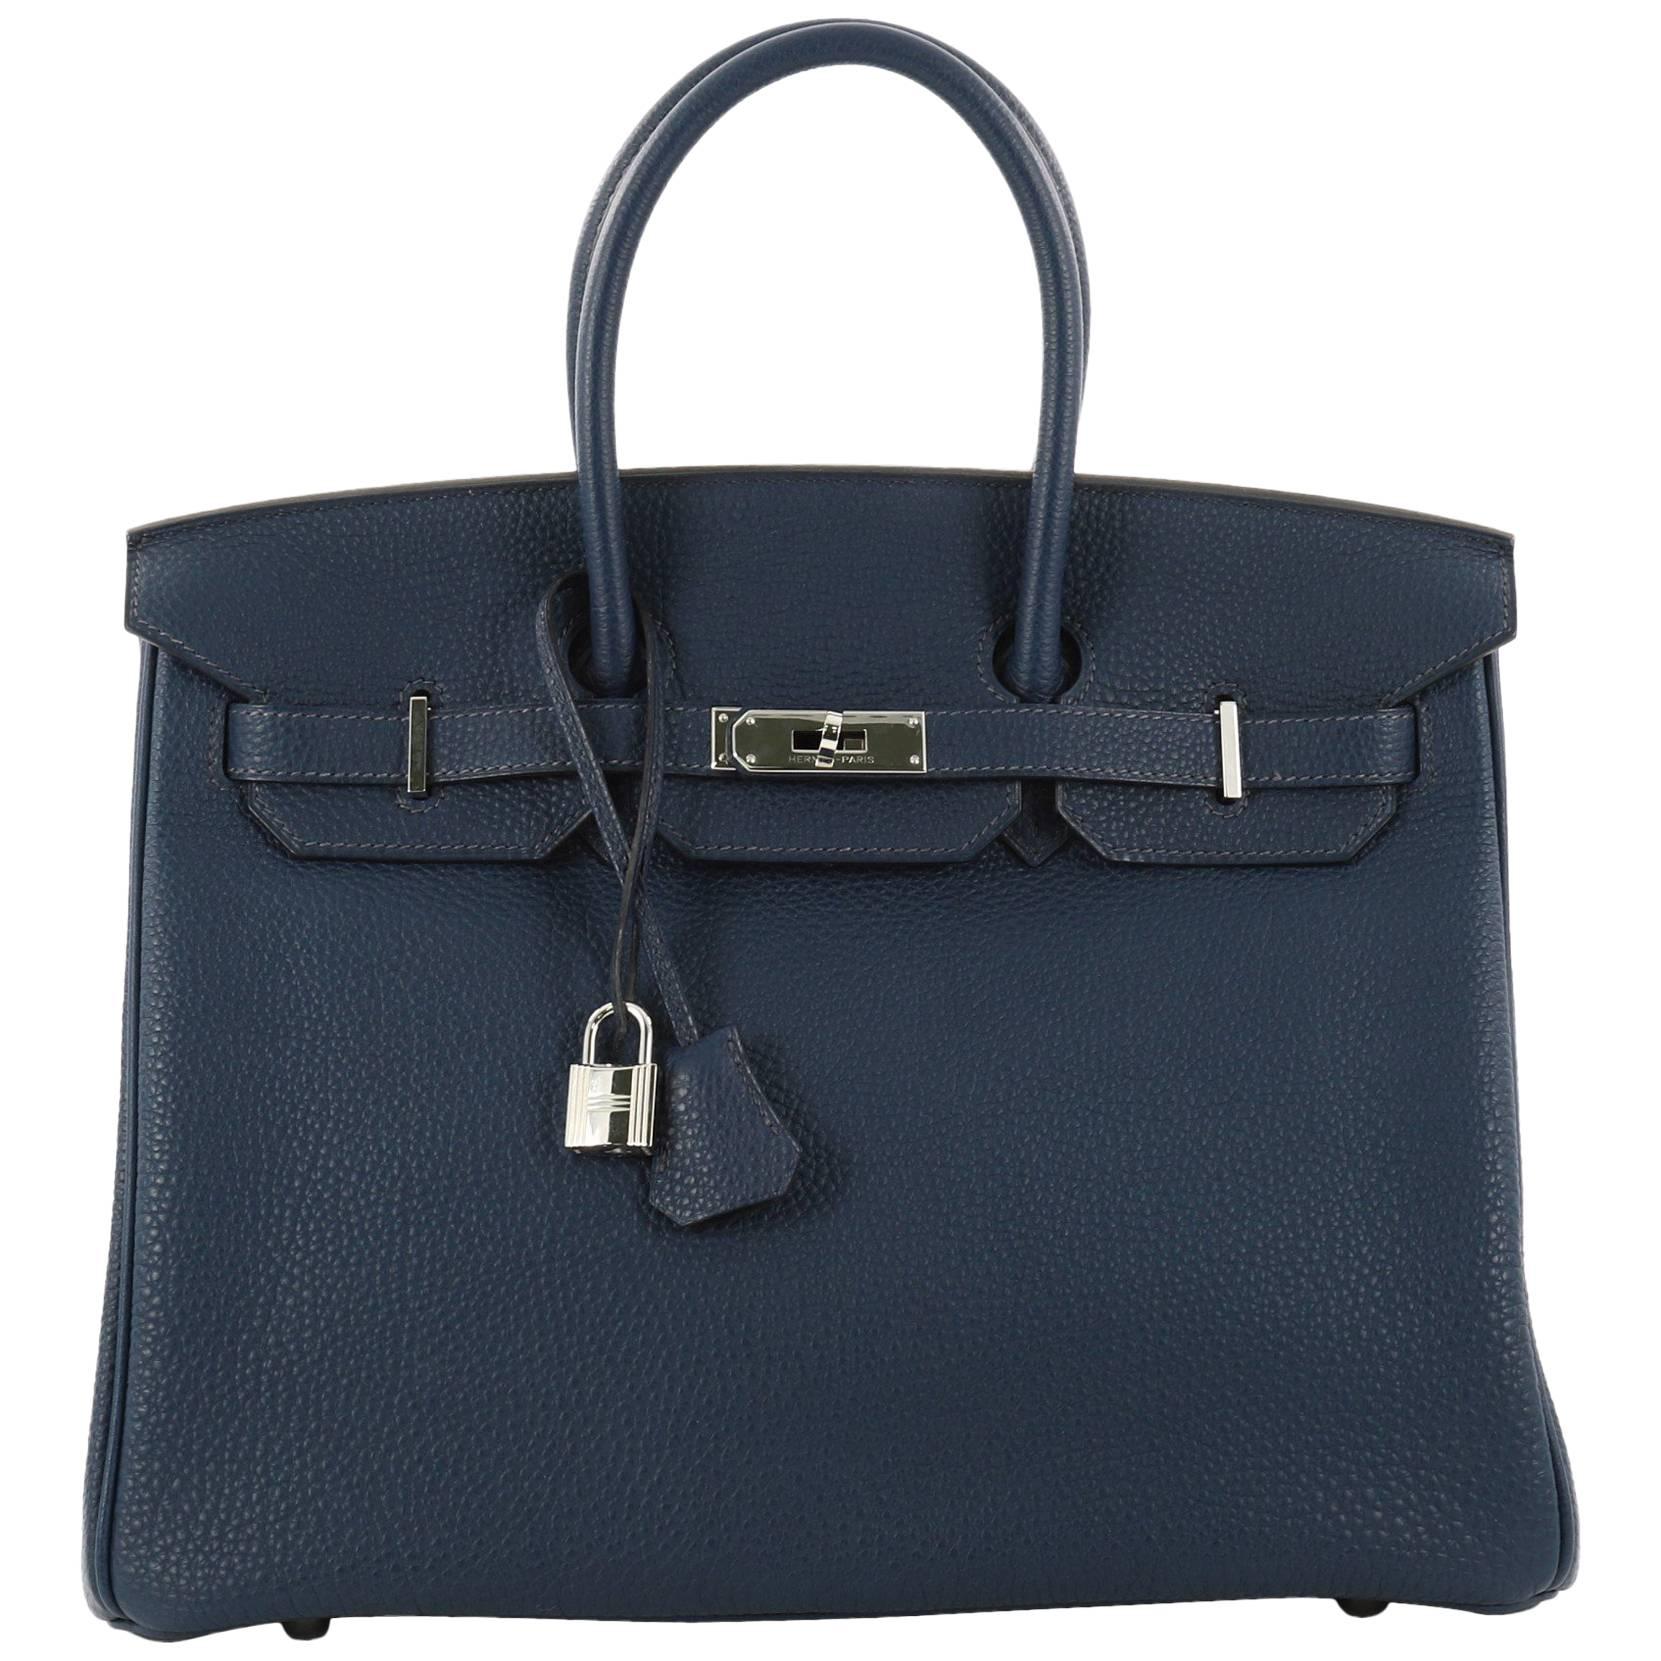 Hermes Birkin Blue Togo with Palladium Hardware 35 Handbag 